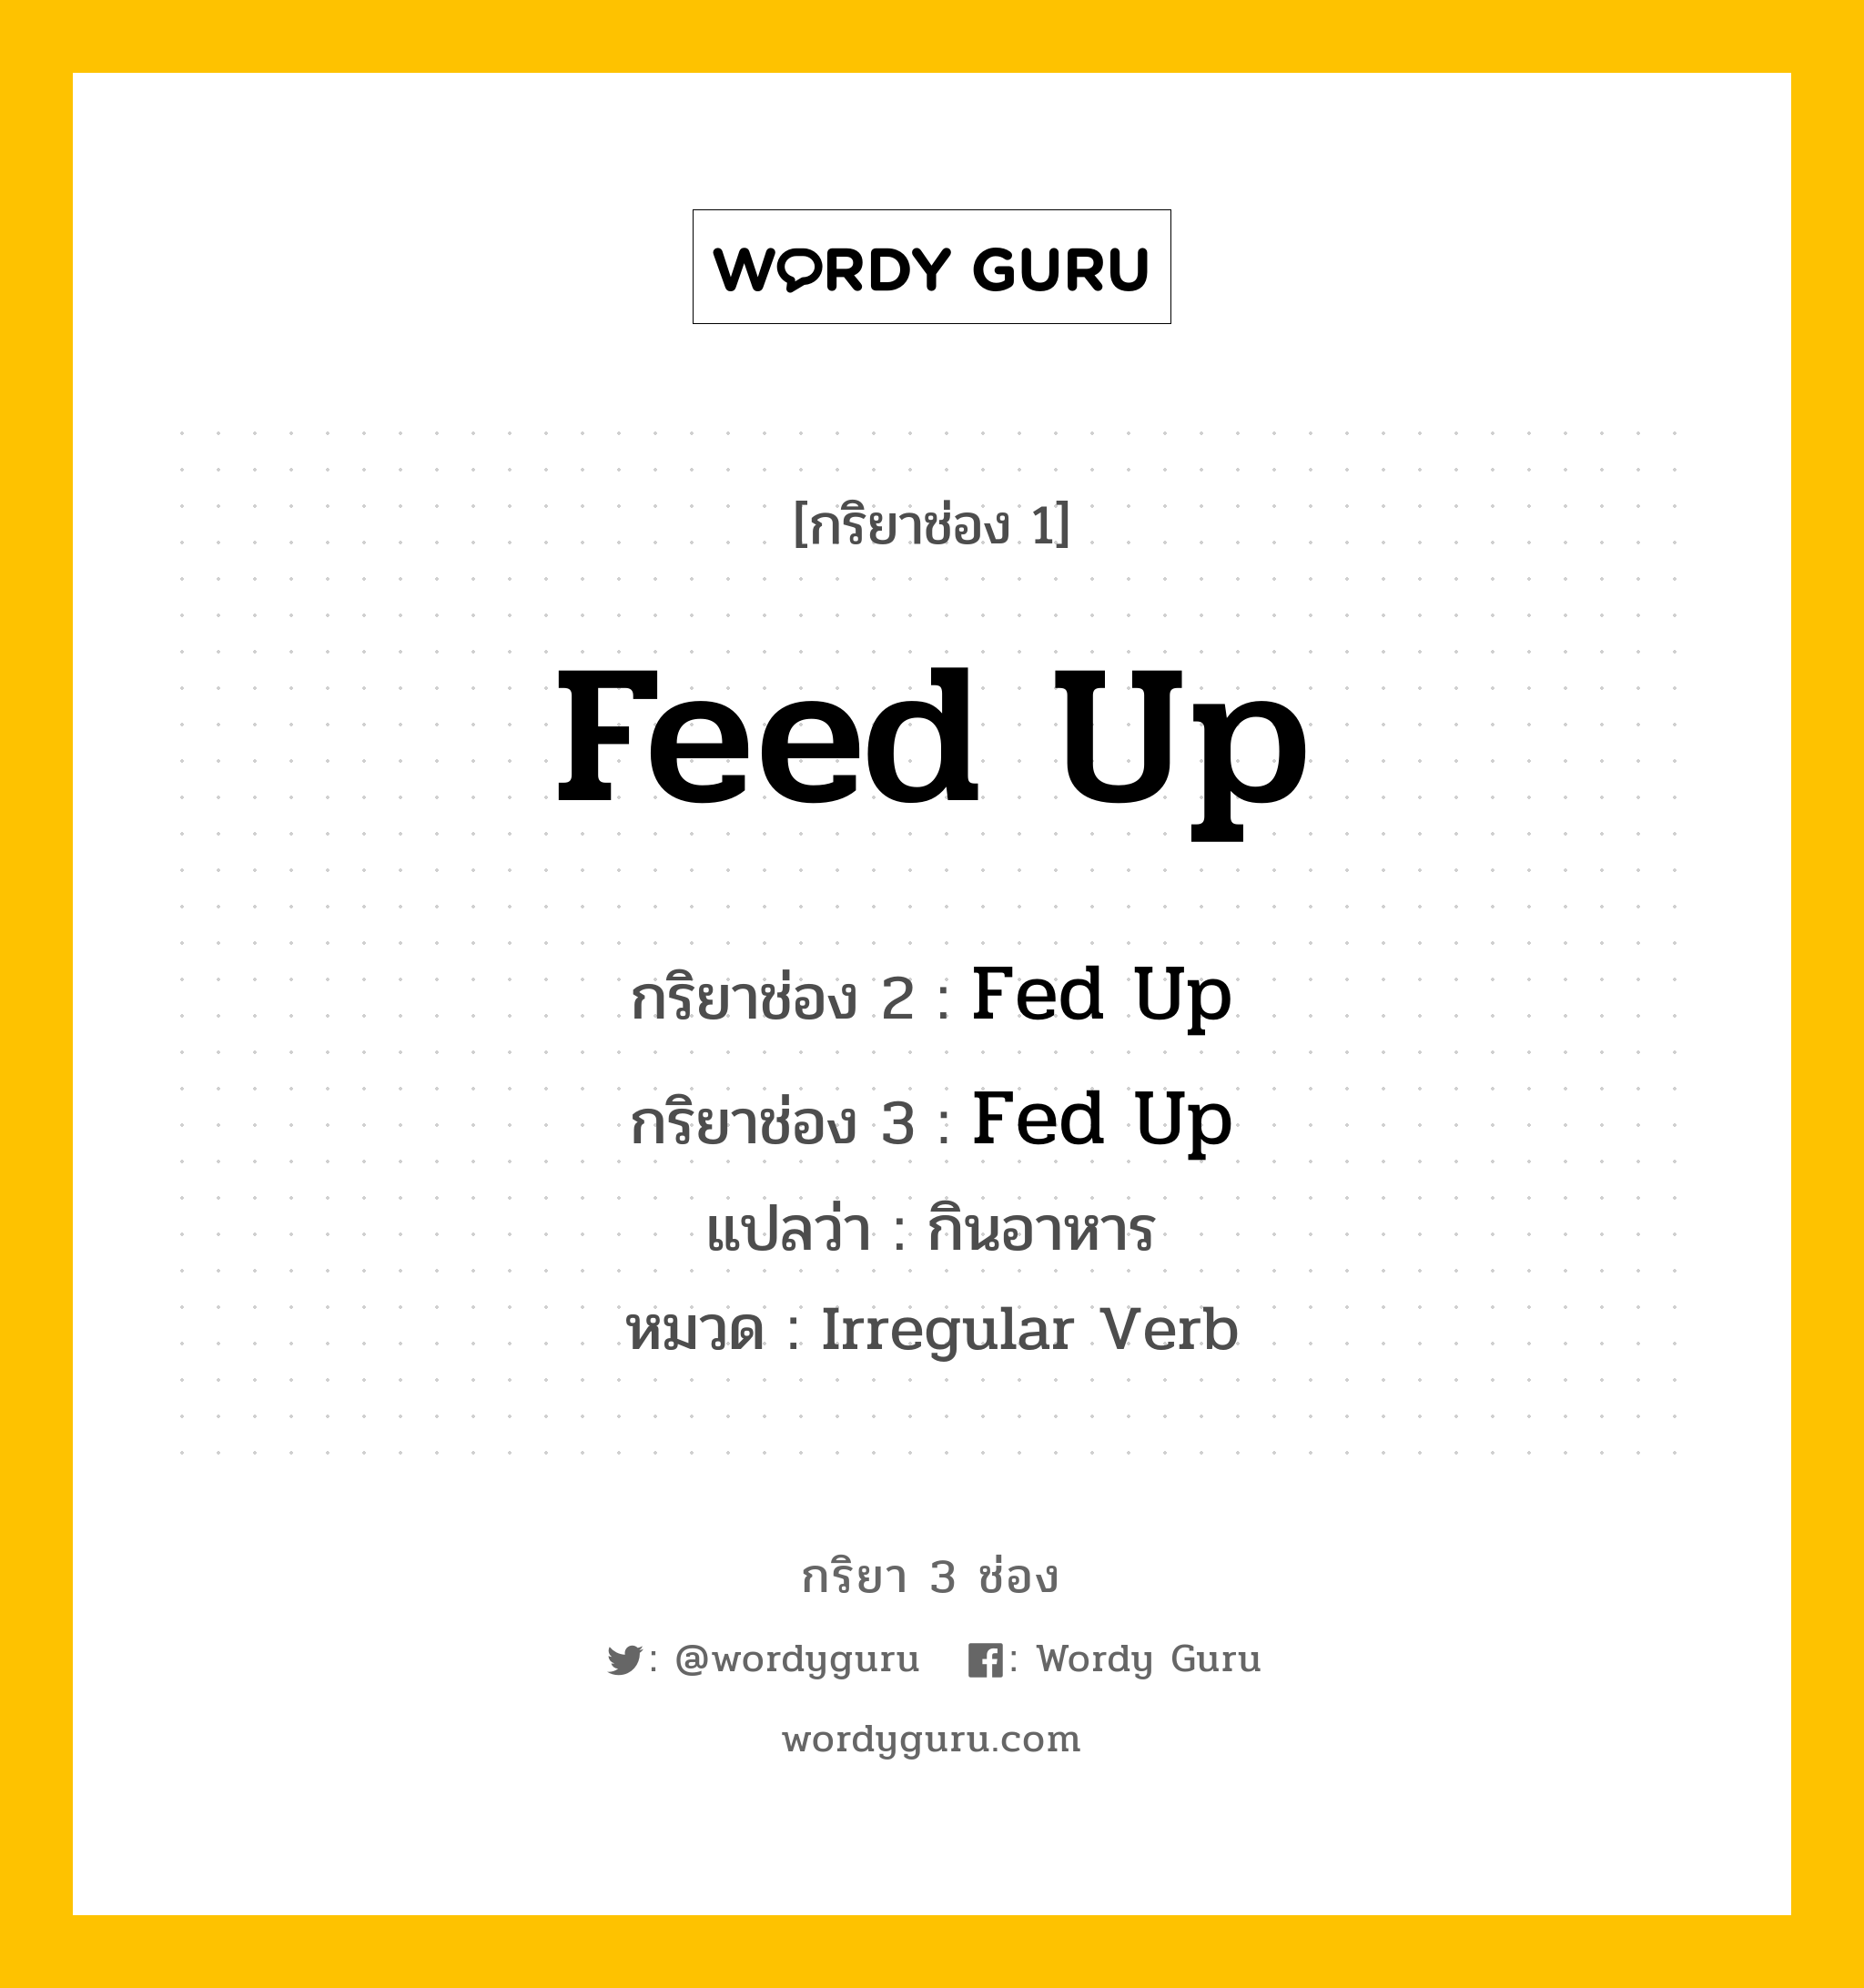 Feed Up มีกริยา 3 ช่องอะไรบ้าง? คำศัพท์ในกลุ่มประเภท Irregular Verb, กริยาช่อง 1 Feed Up กริยาช่อง 2 Fed Up กริยาช่อง 3 Fed Up แปลว่า กินอาหาร หมวด Irregular Verb หมวด Irregular Verb